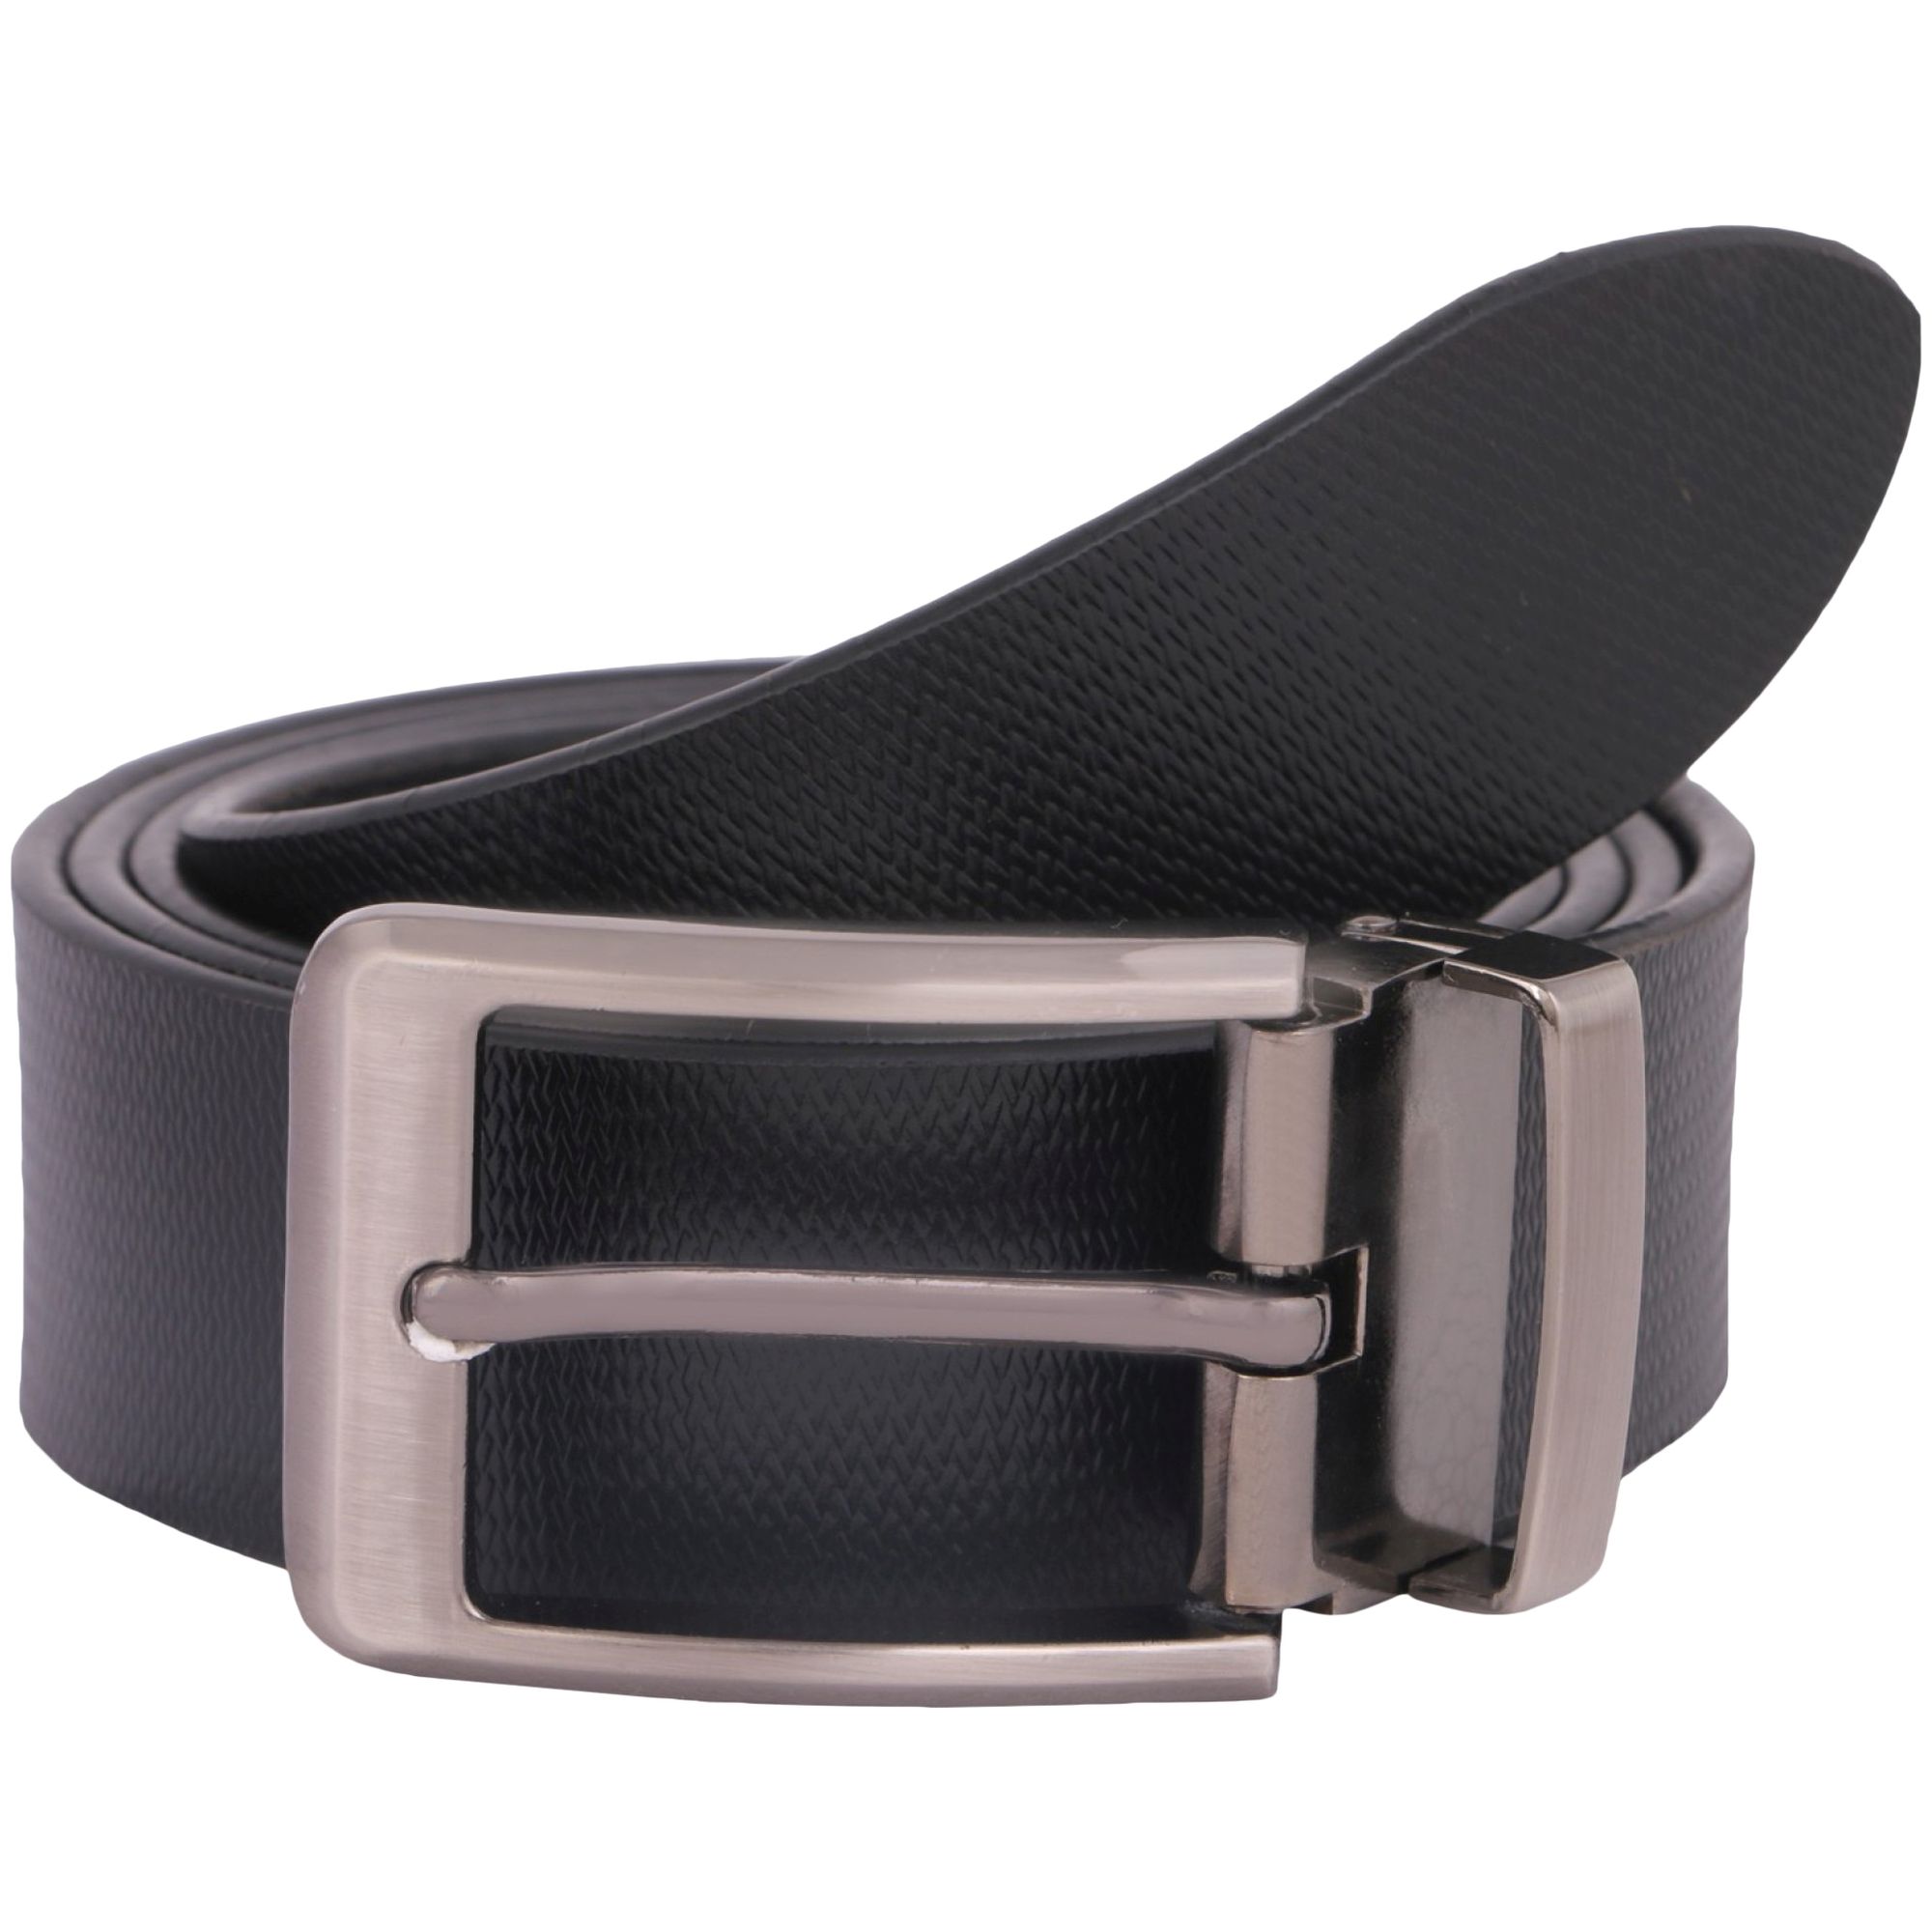 Debonair International Men's Genuine Leather Belt with 5 Punch Holes, DI934271, Black